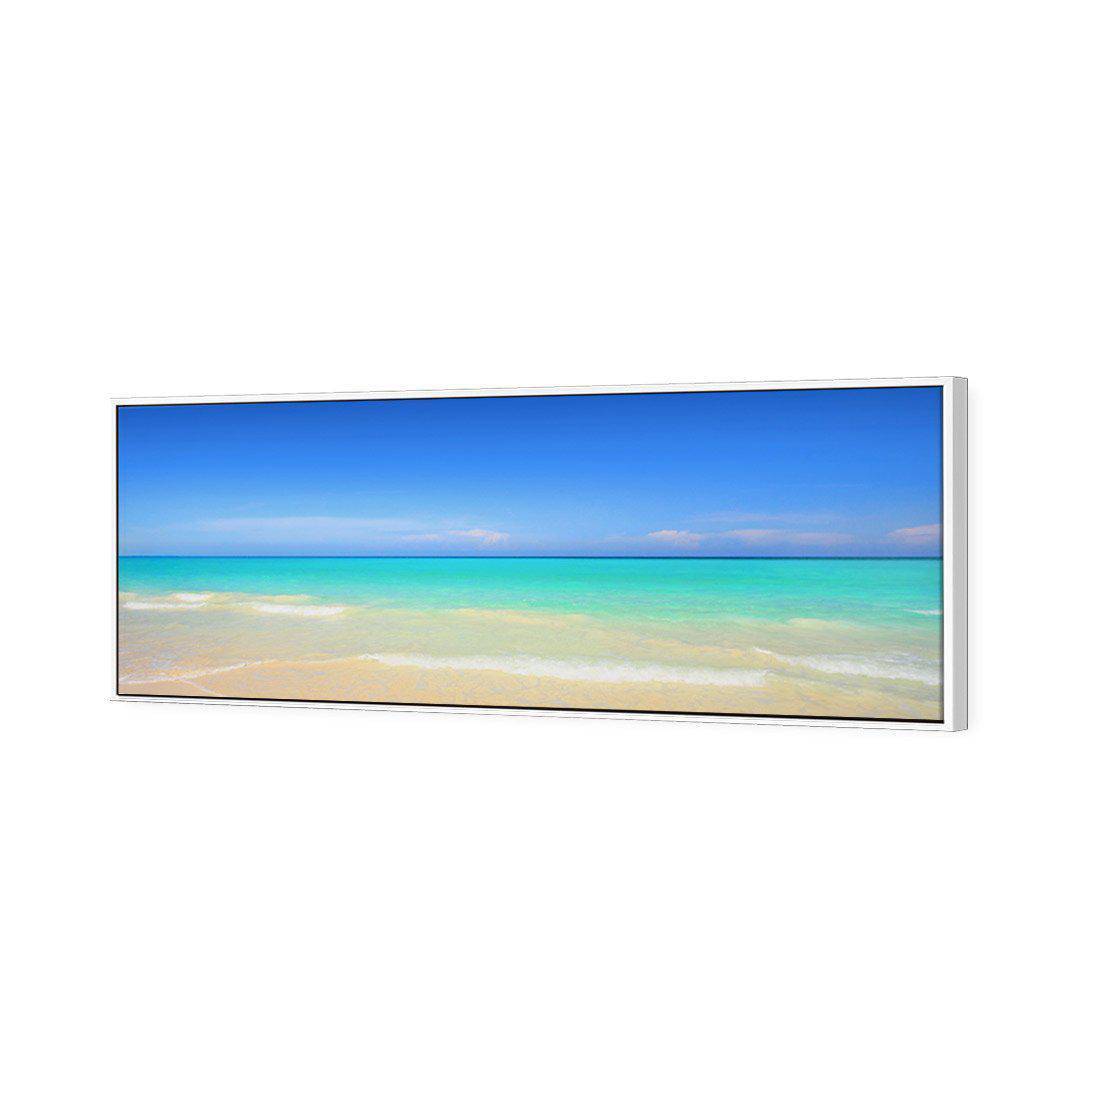 Paradise Beach Canvas Art-Canvas-Wall Art Designs-60x20cm-Canvas - White Frame-Wall Art Designs